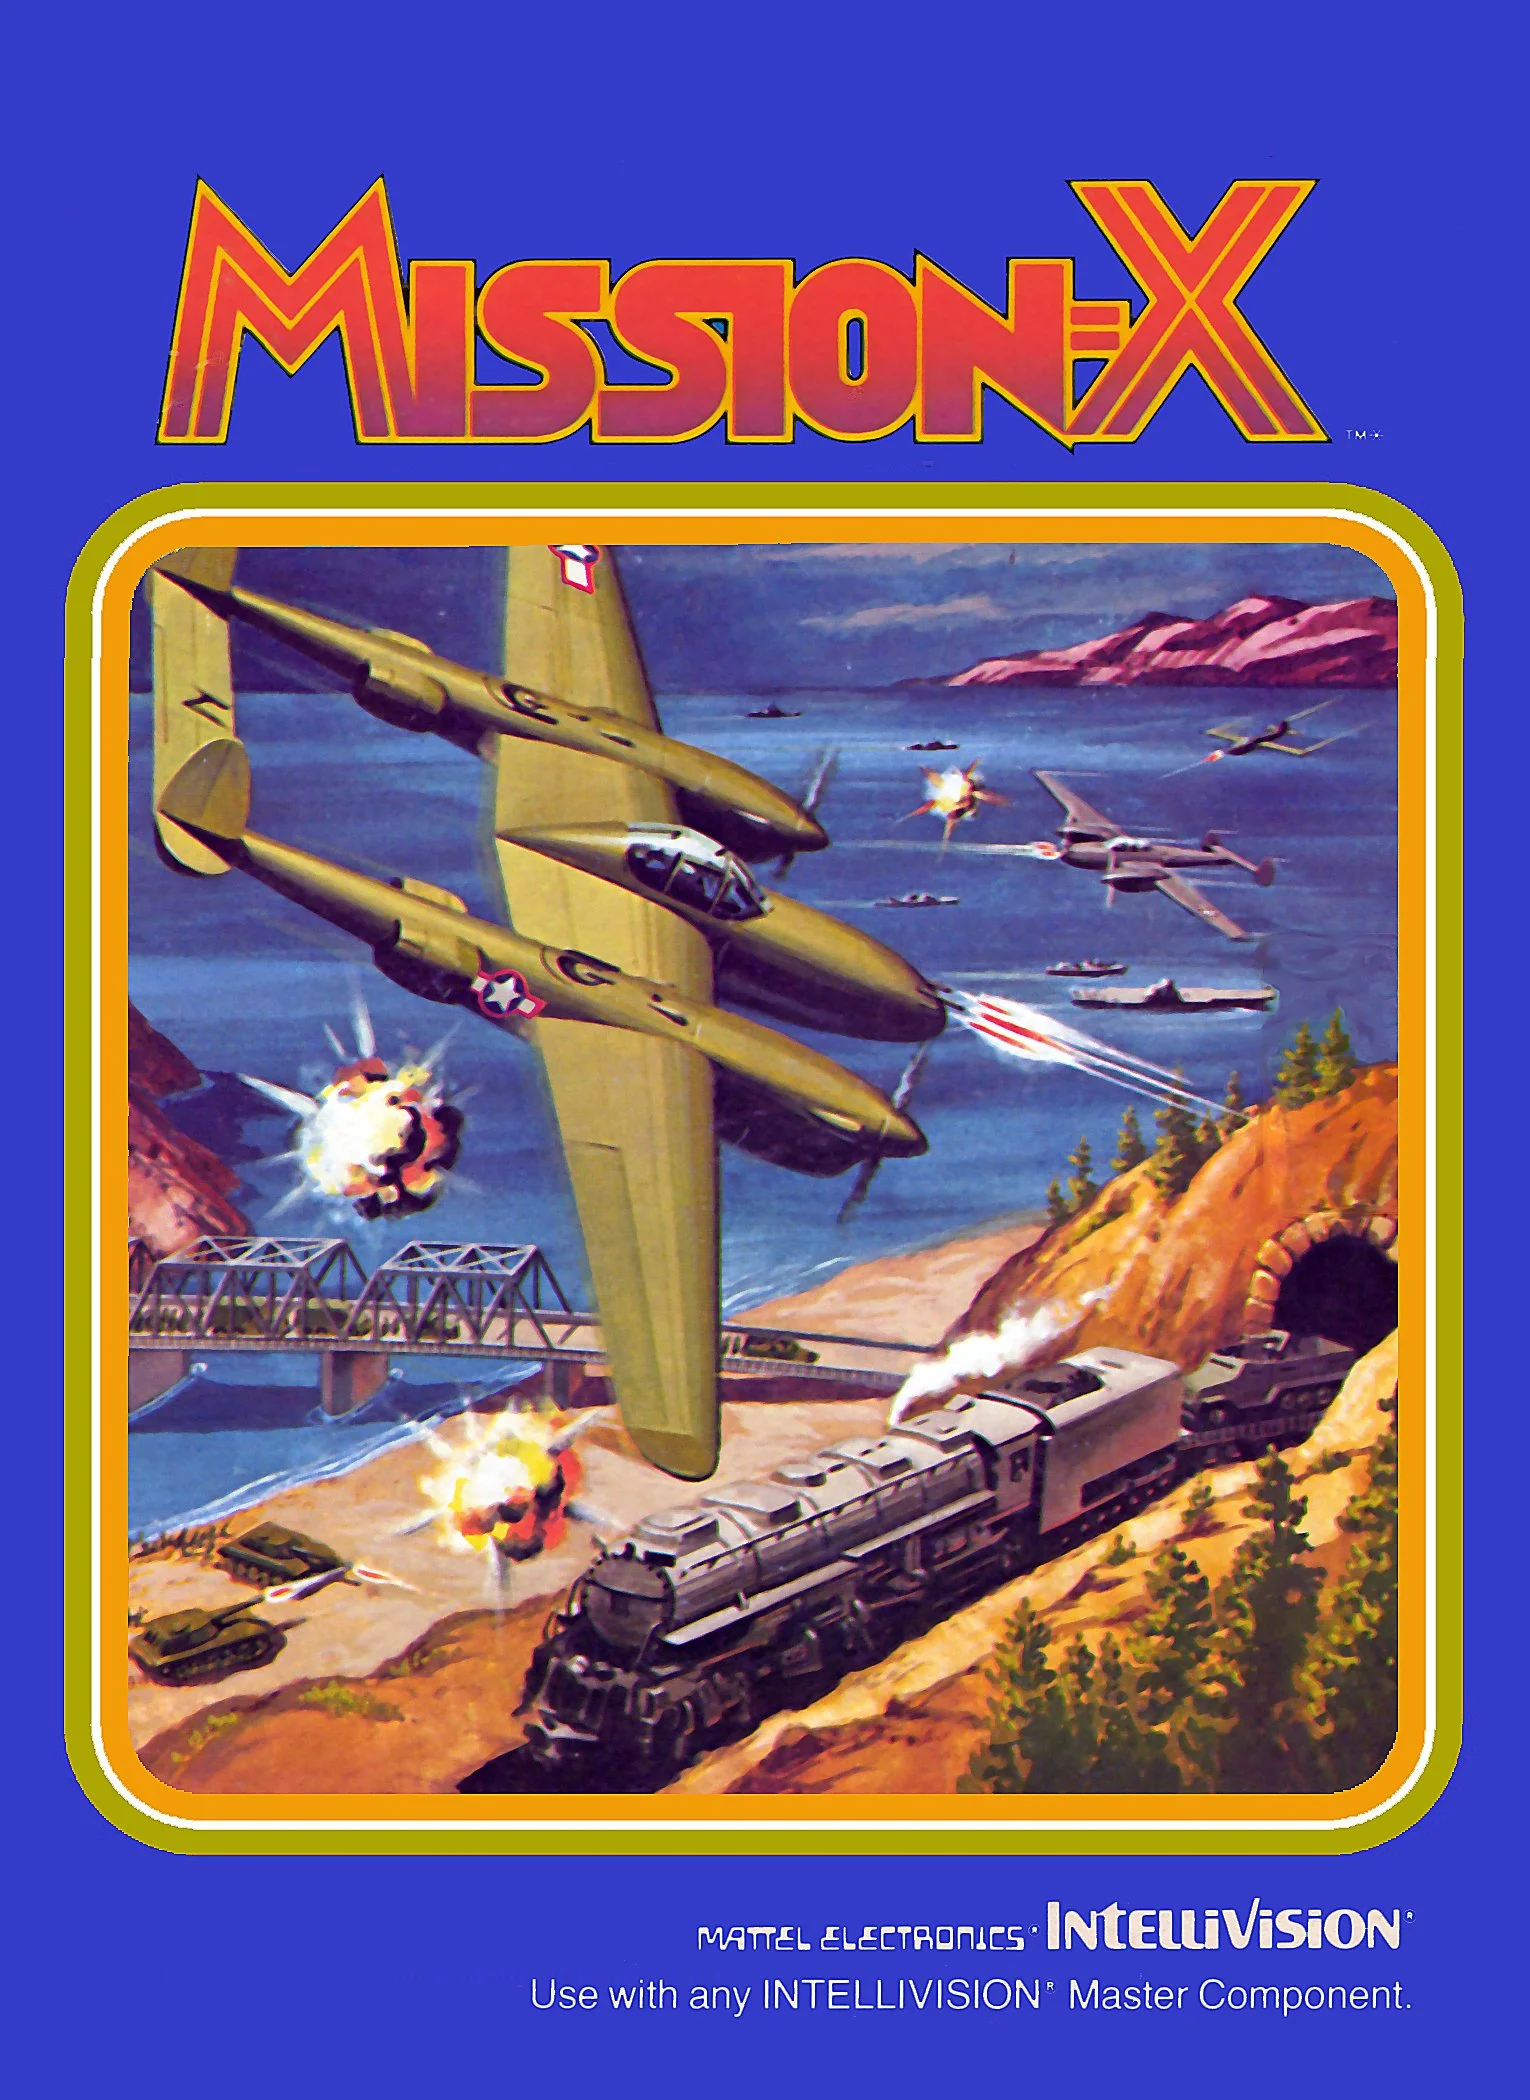 Mission-X